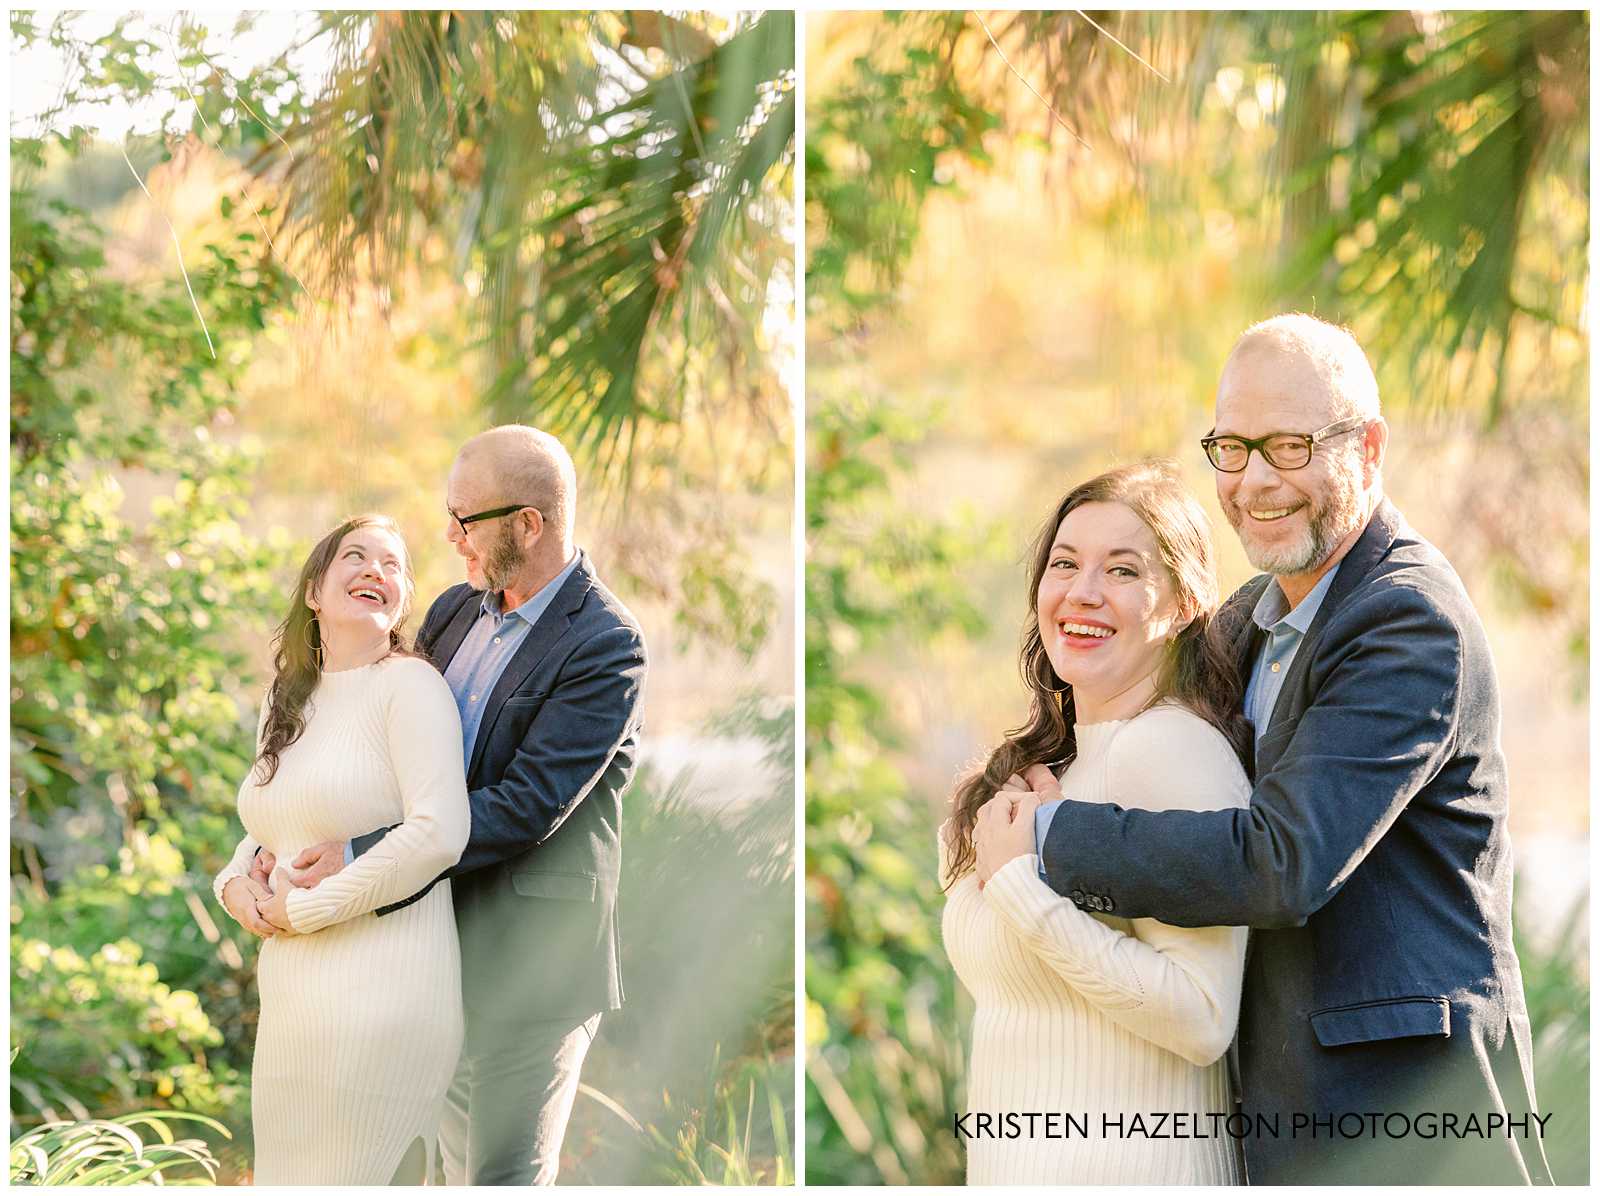 Man hugging fiancee under palm trees 